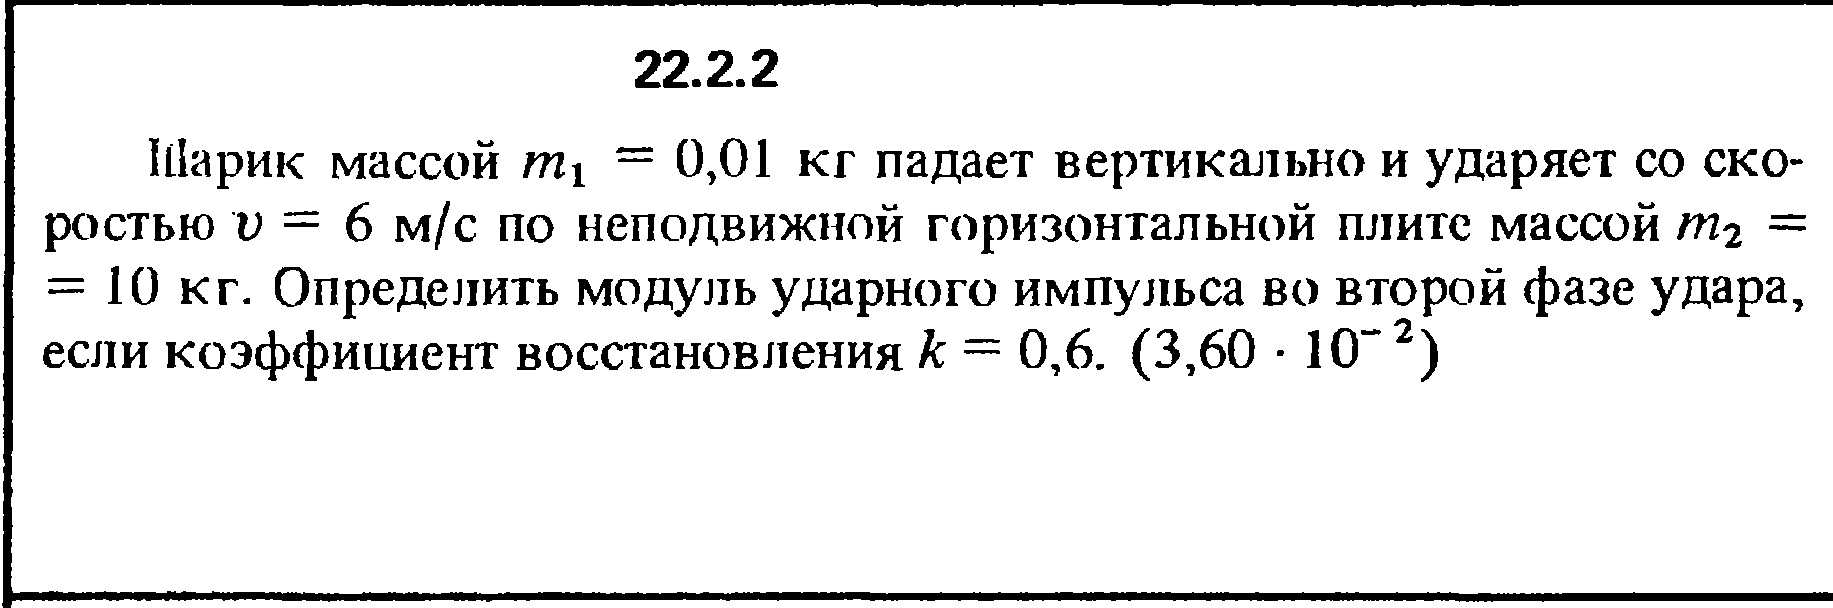 Решение 22.2.2 из сборника (решебника) Кепе О.Е. 1989